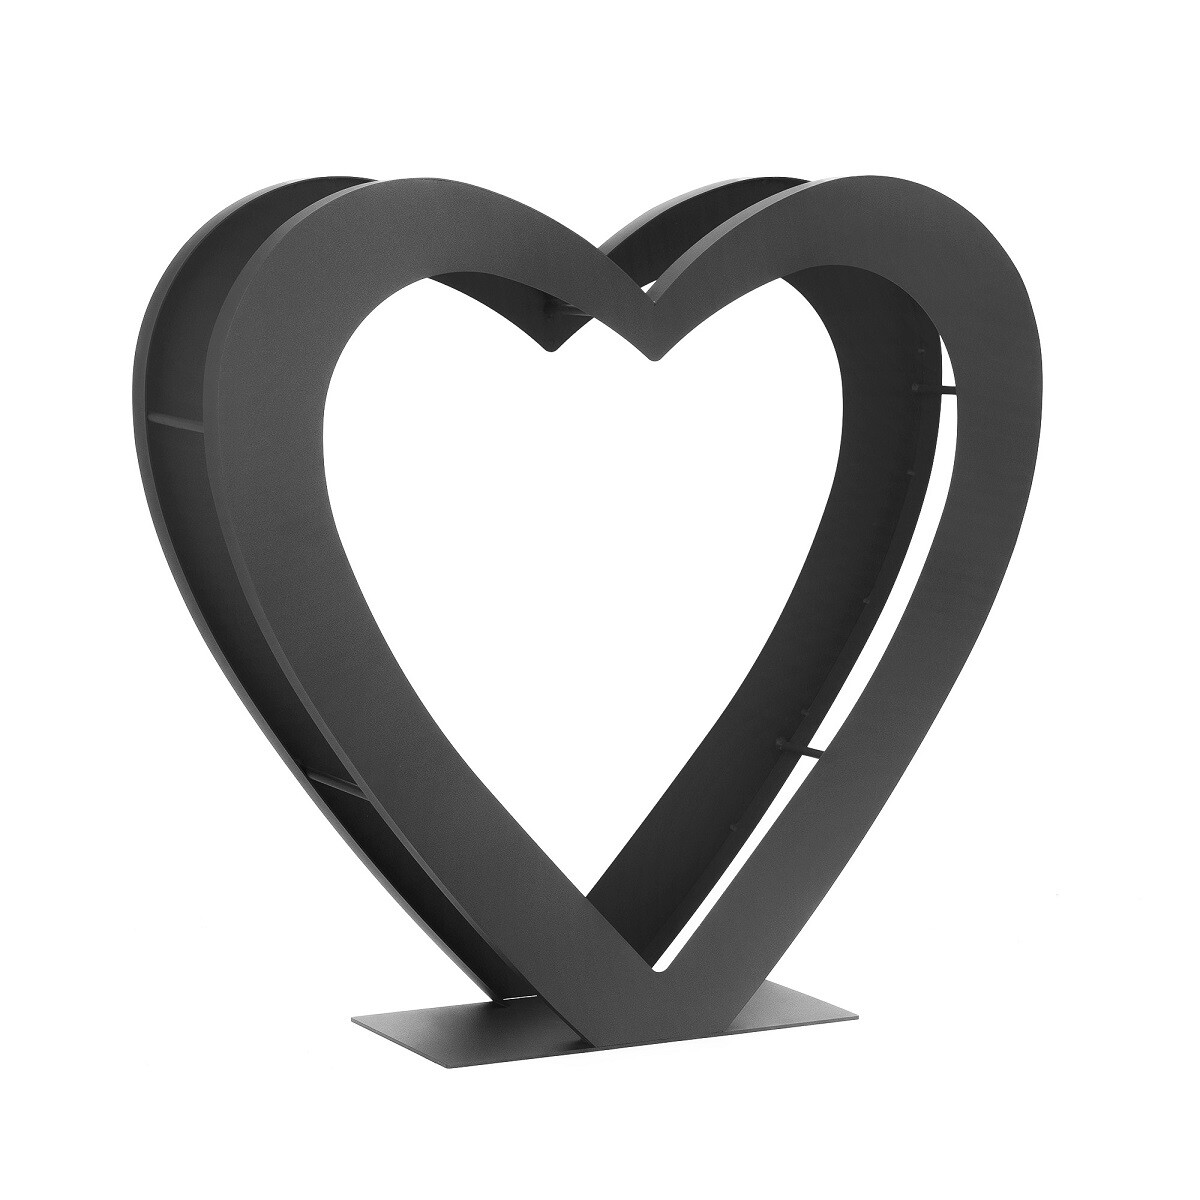 Large black firewood rack heart shape modern